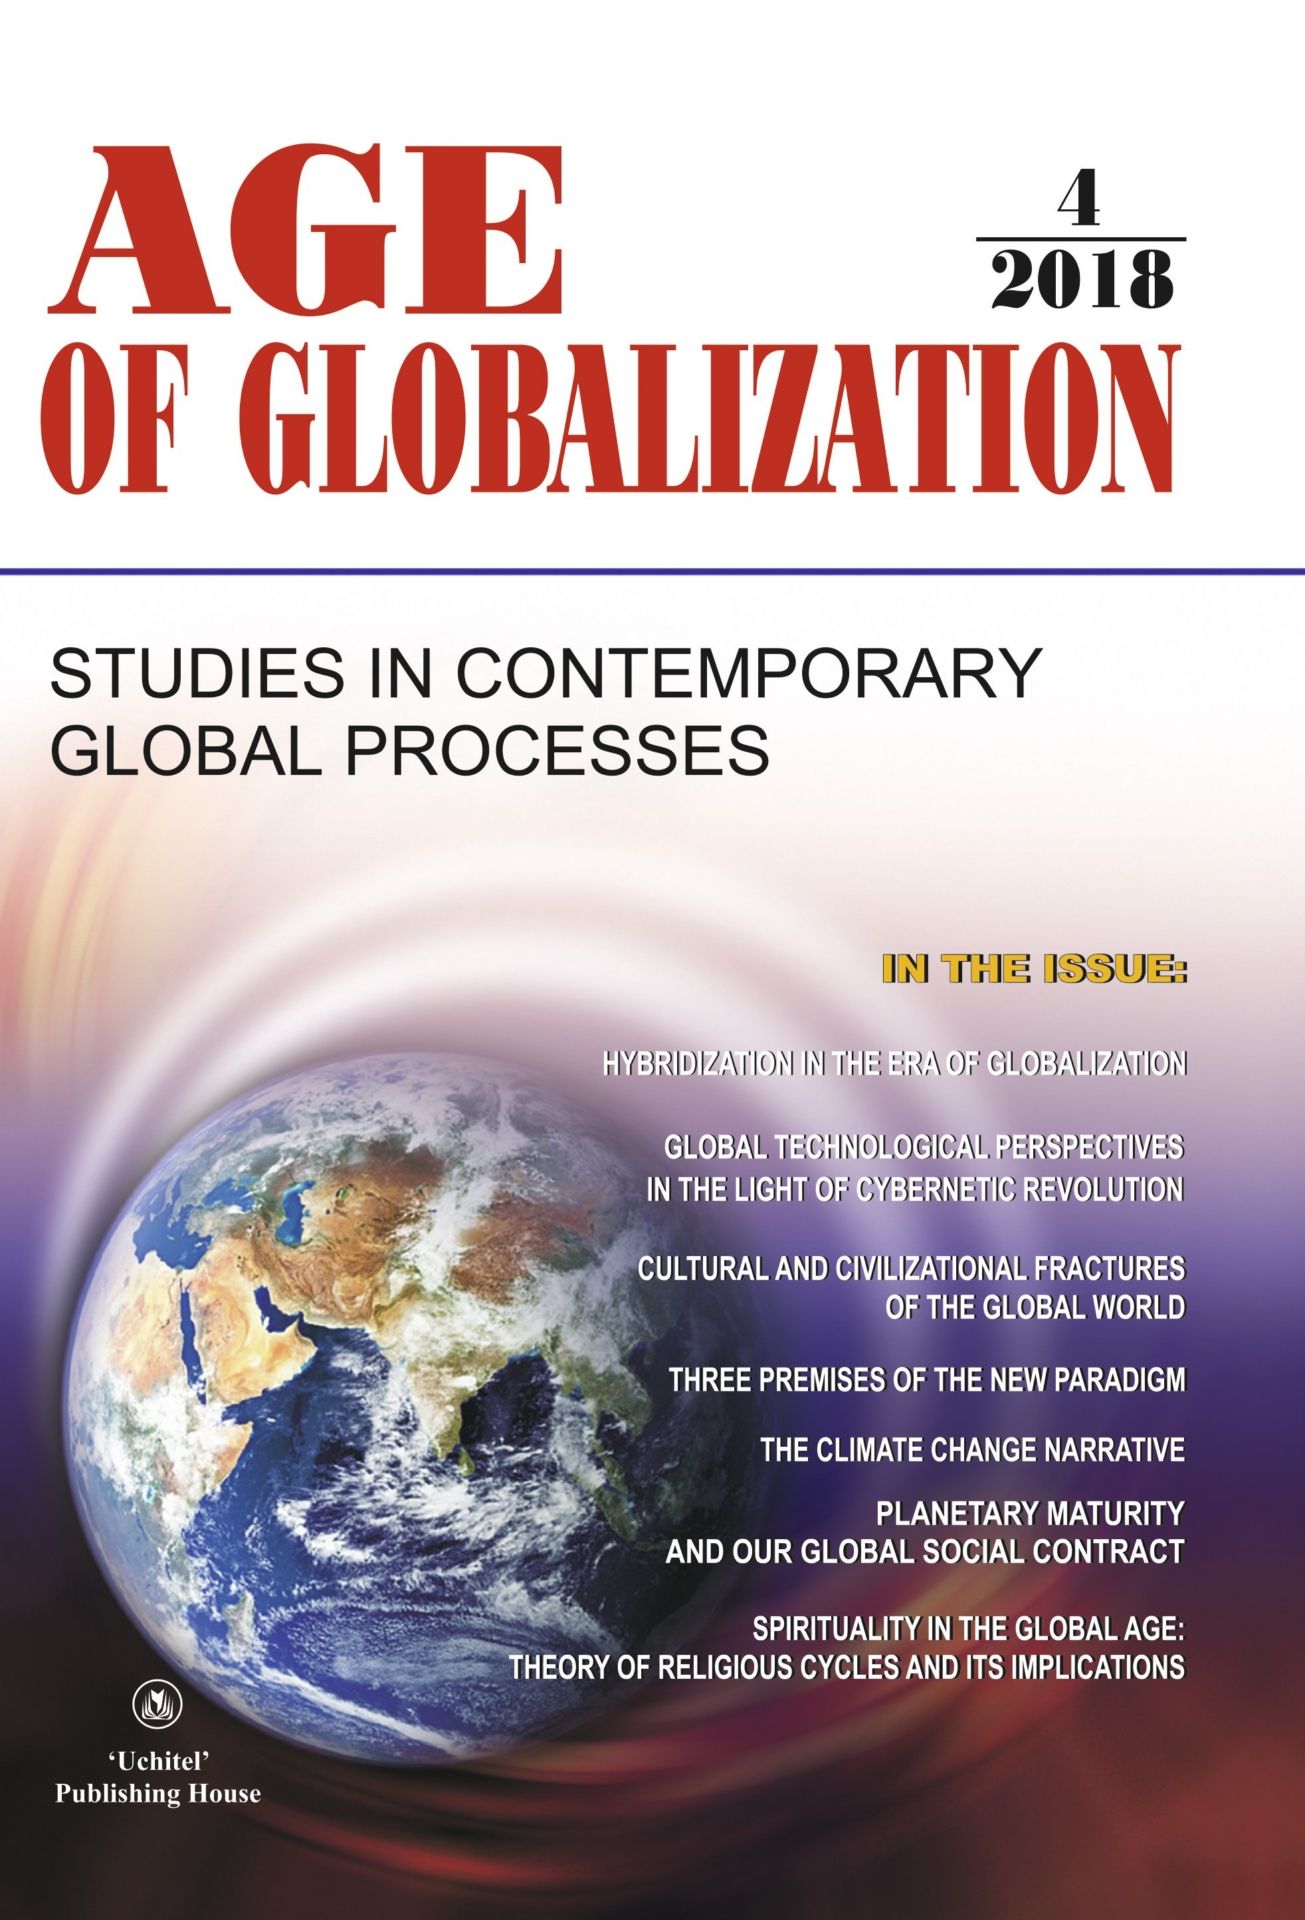   УчМаг Age of Globalization. Век глобализации на английском языке. № 4 2018 г.